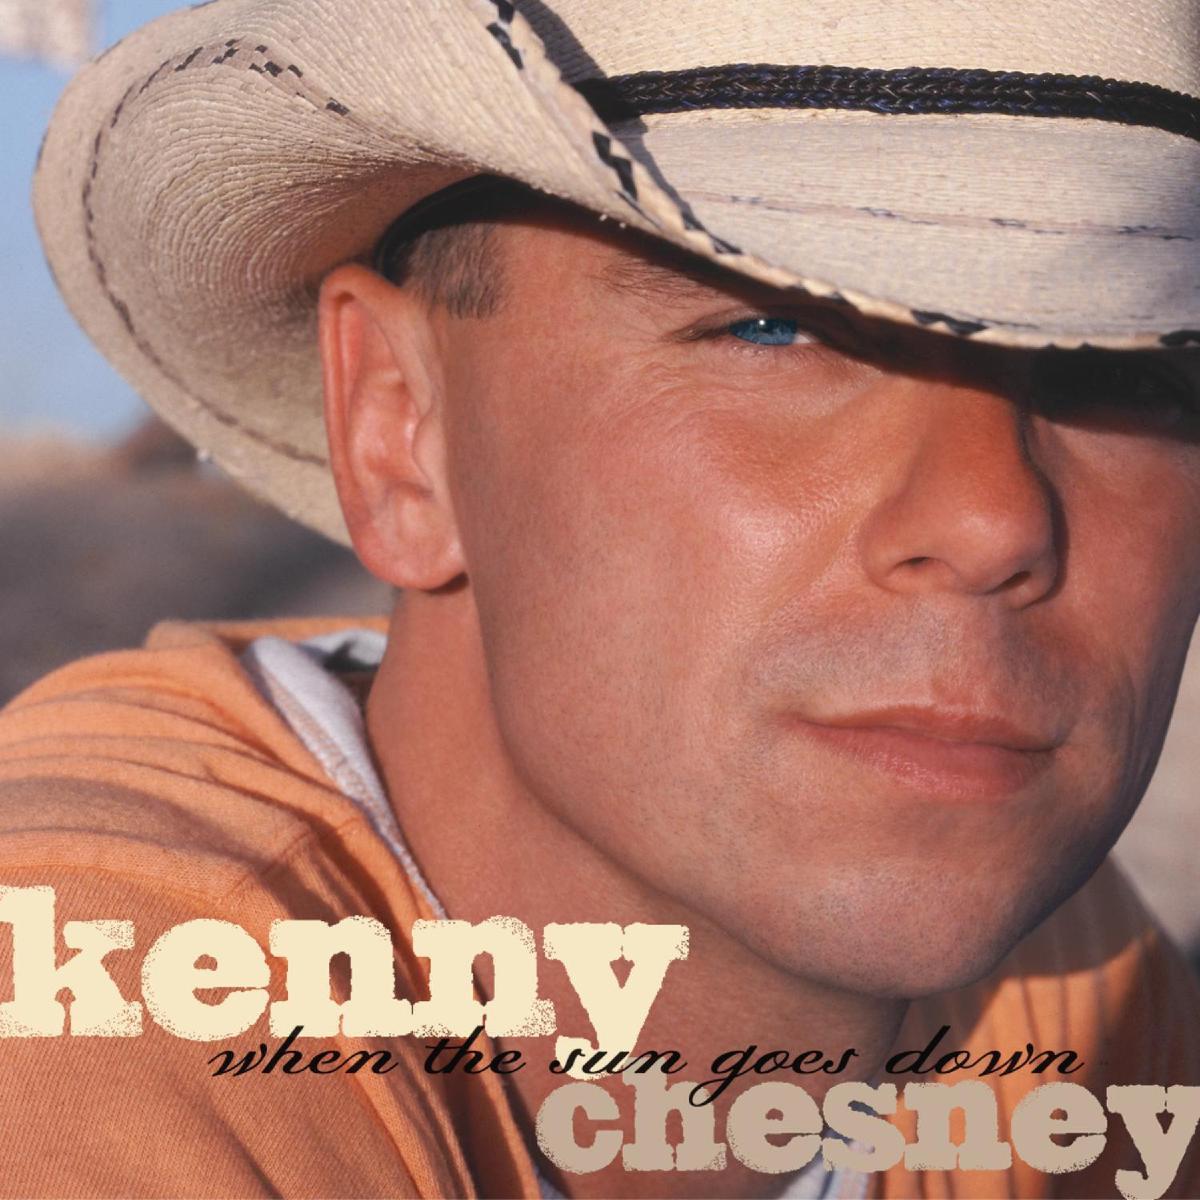 kenny chesney i go back tour locations